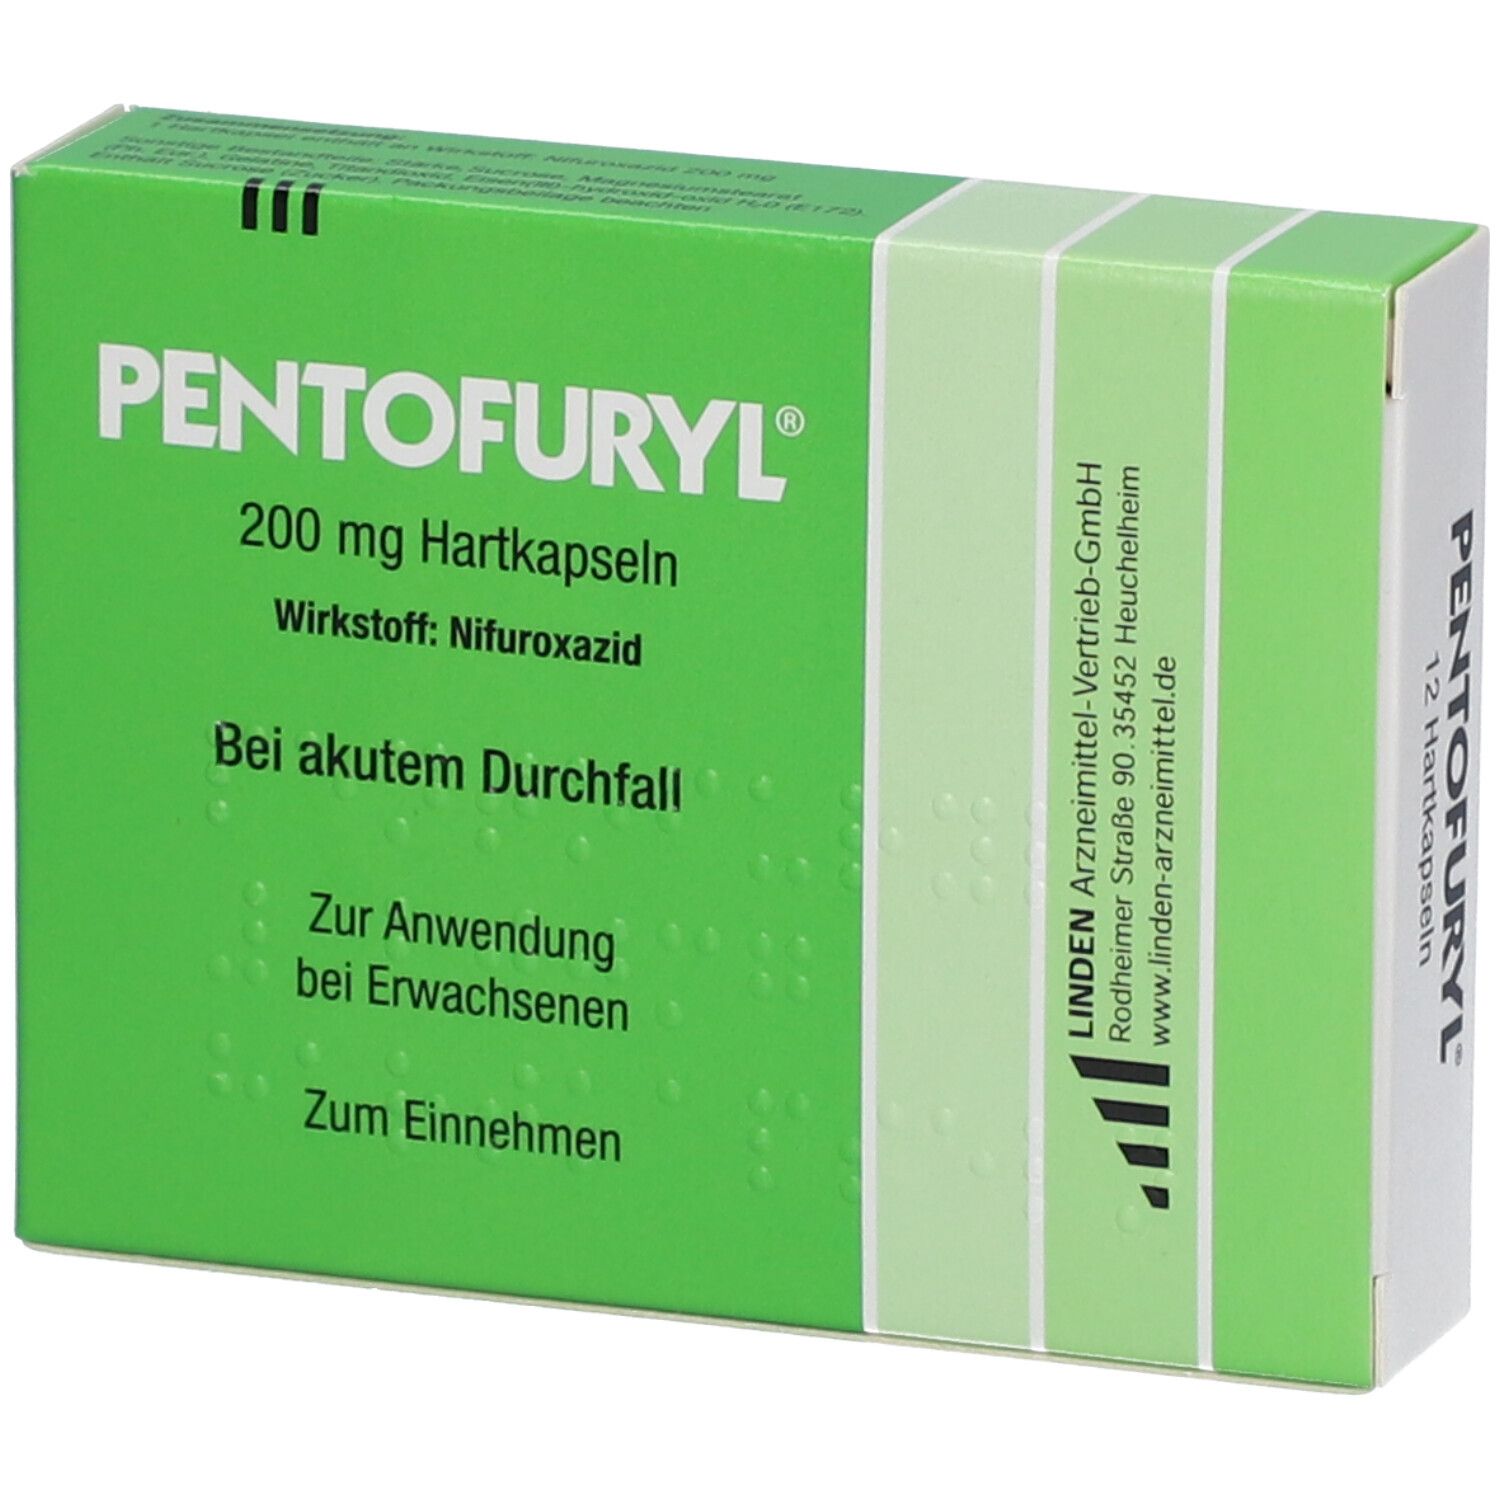 Pentofuryl® 200 mg Hartkapseln